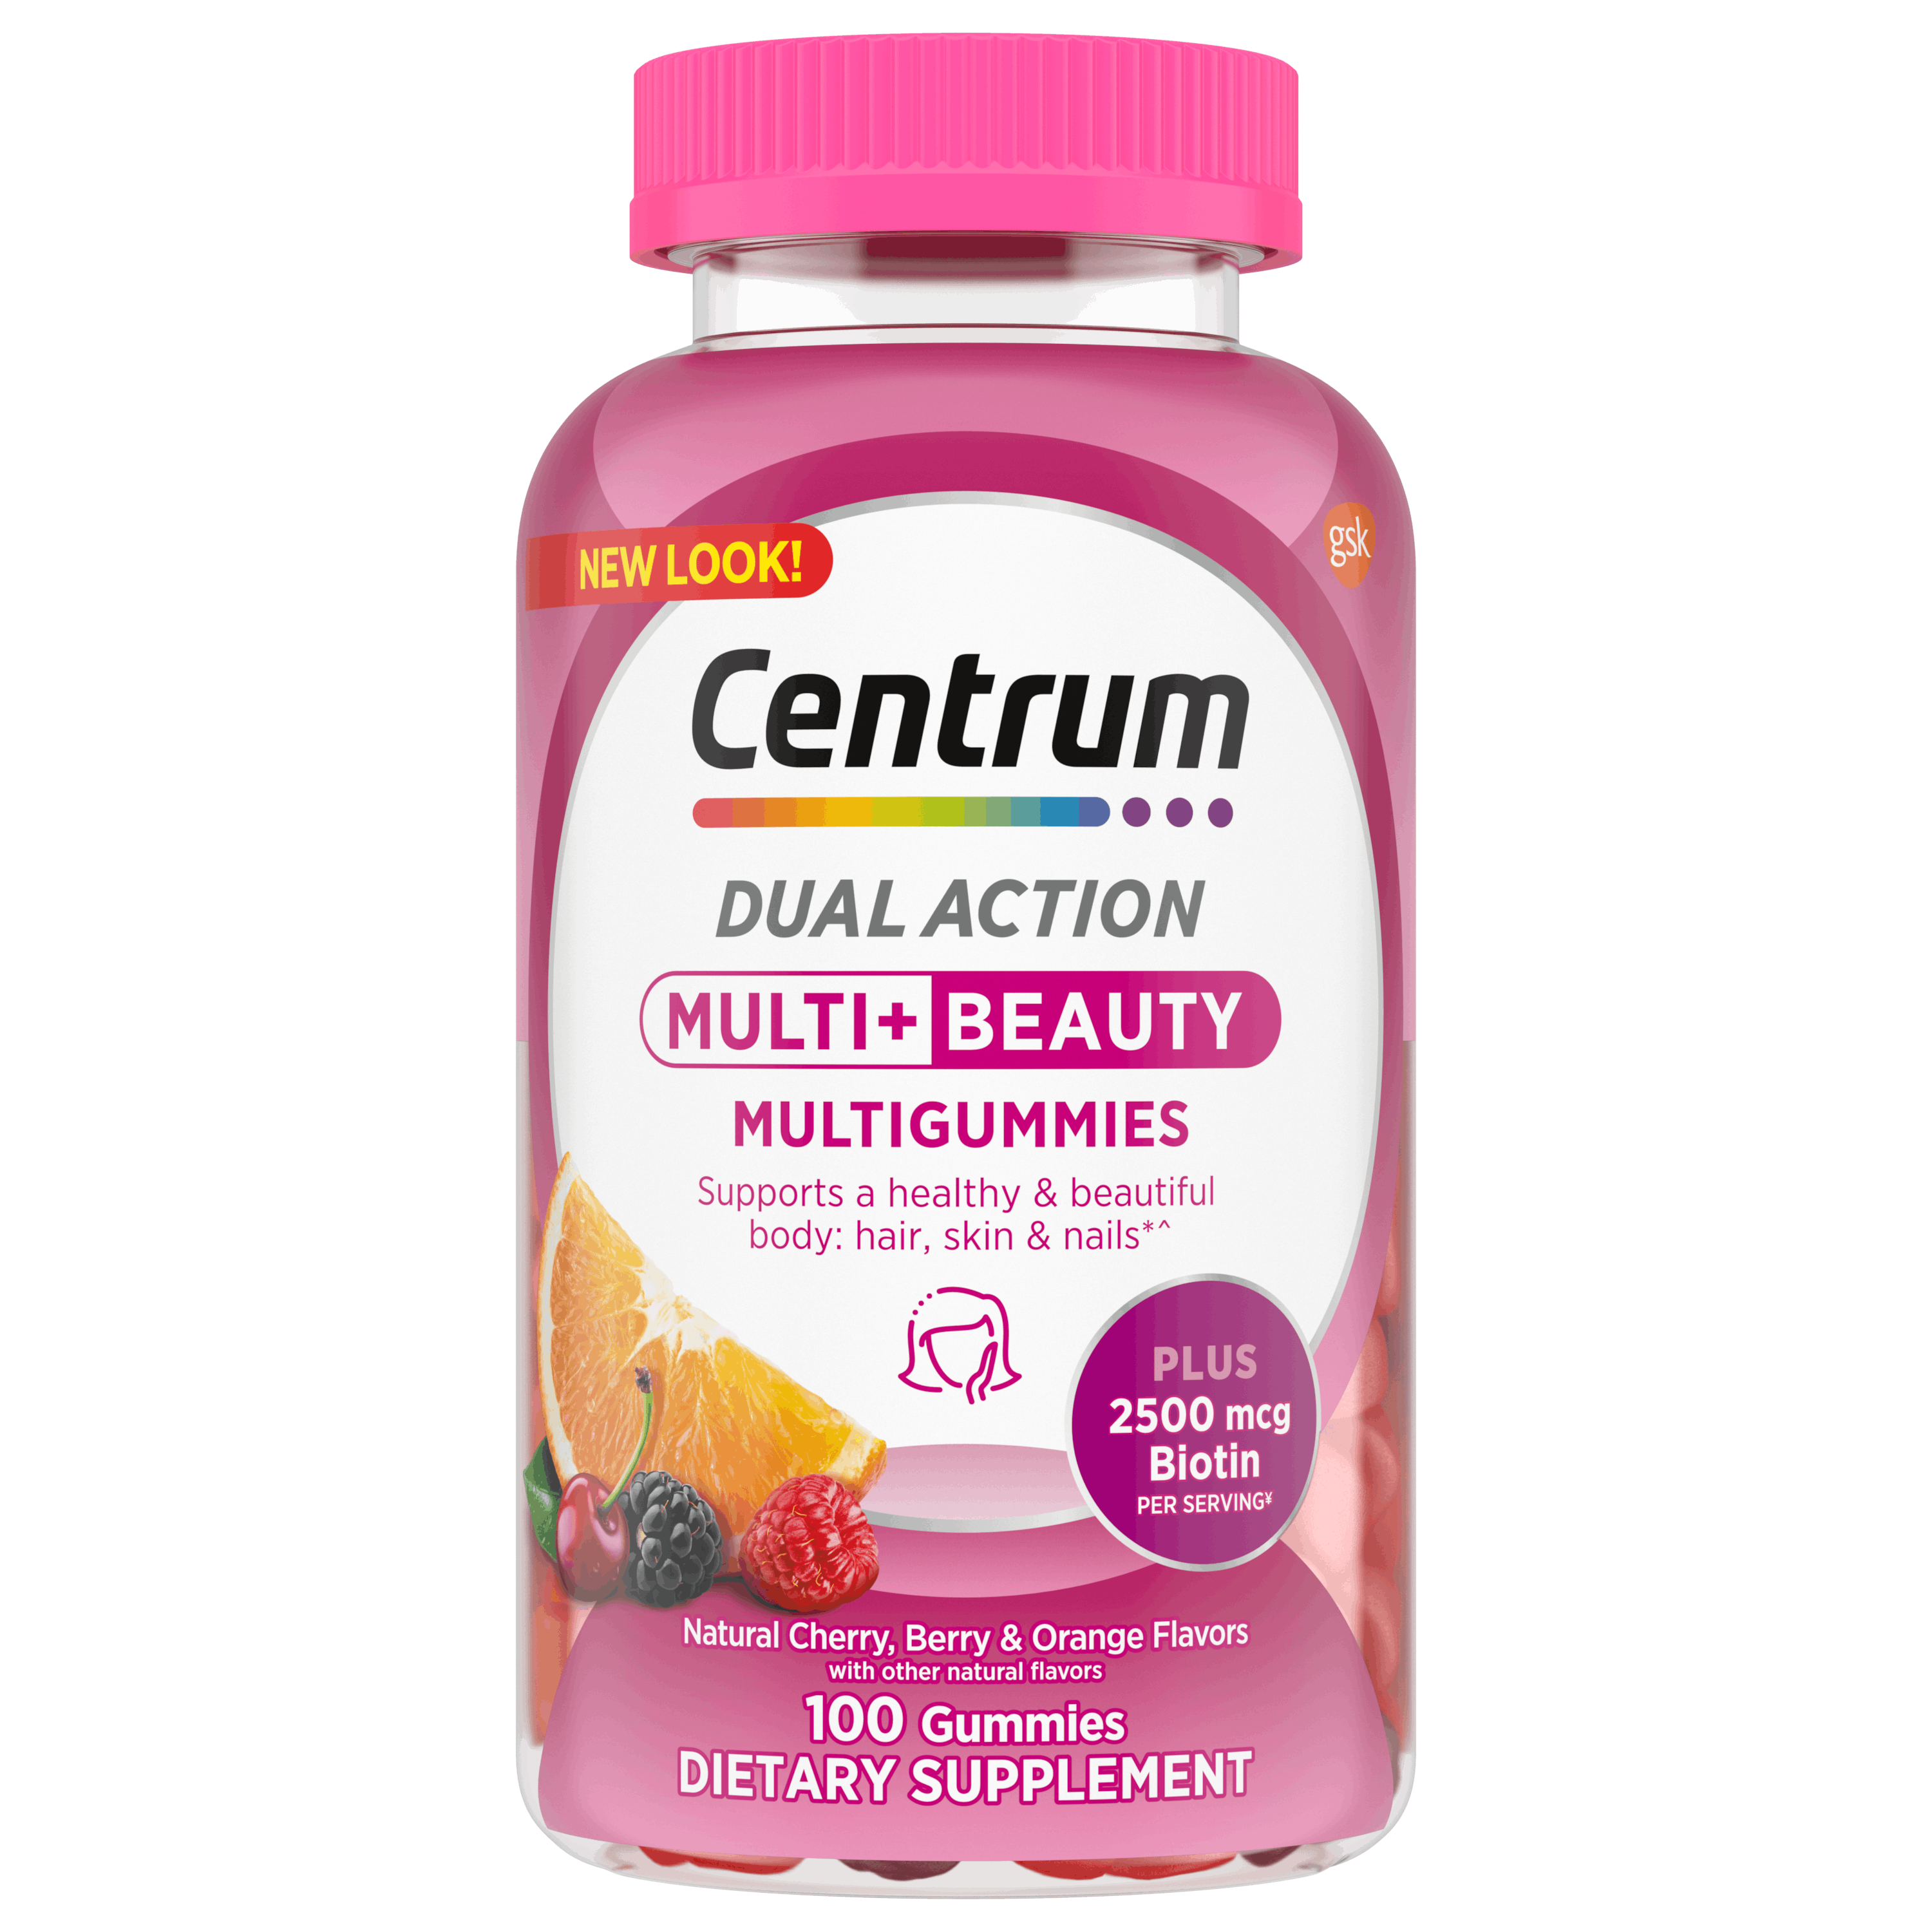 Centrum Women’s Whole Food Blend Multivitamin4